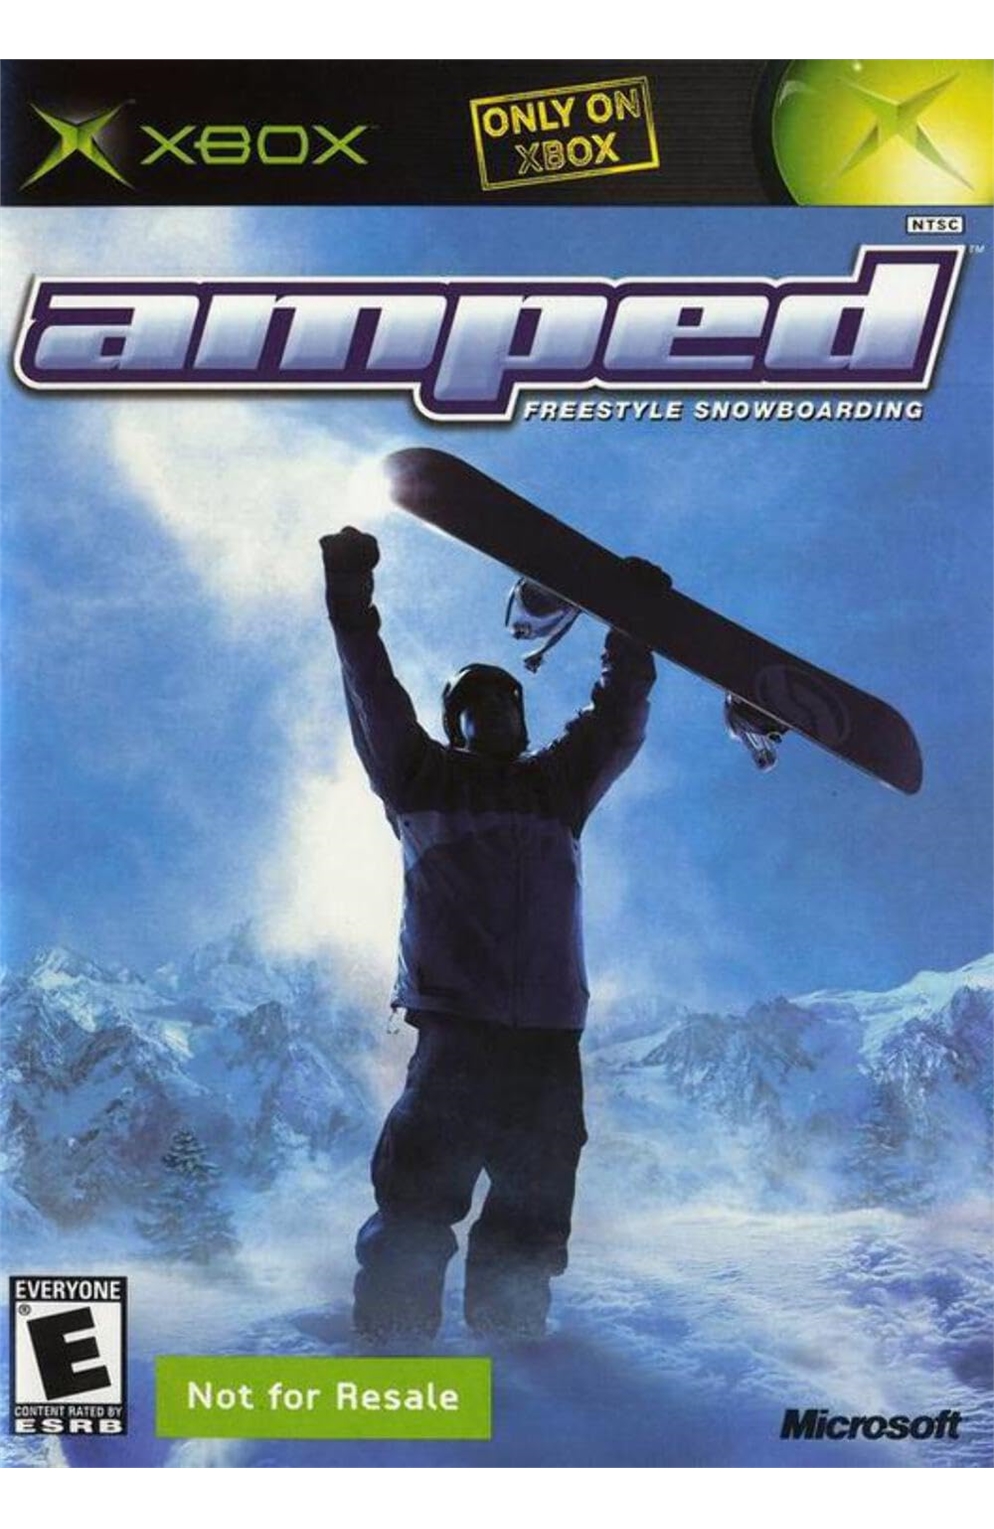 Xbox Xb Amped Freestyle Snowboarding